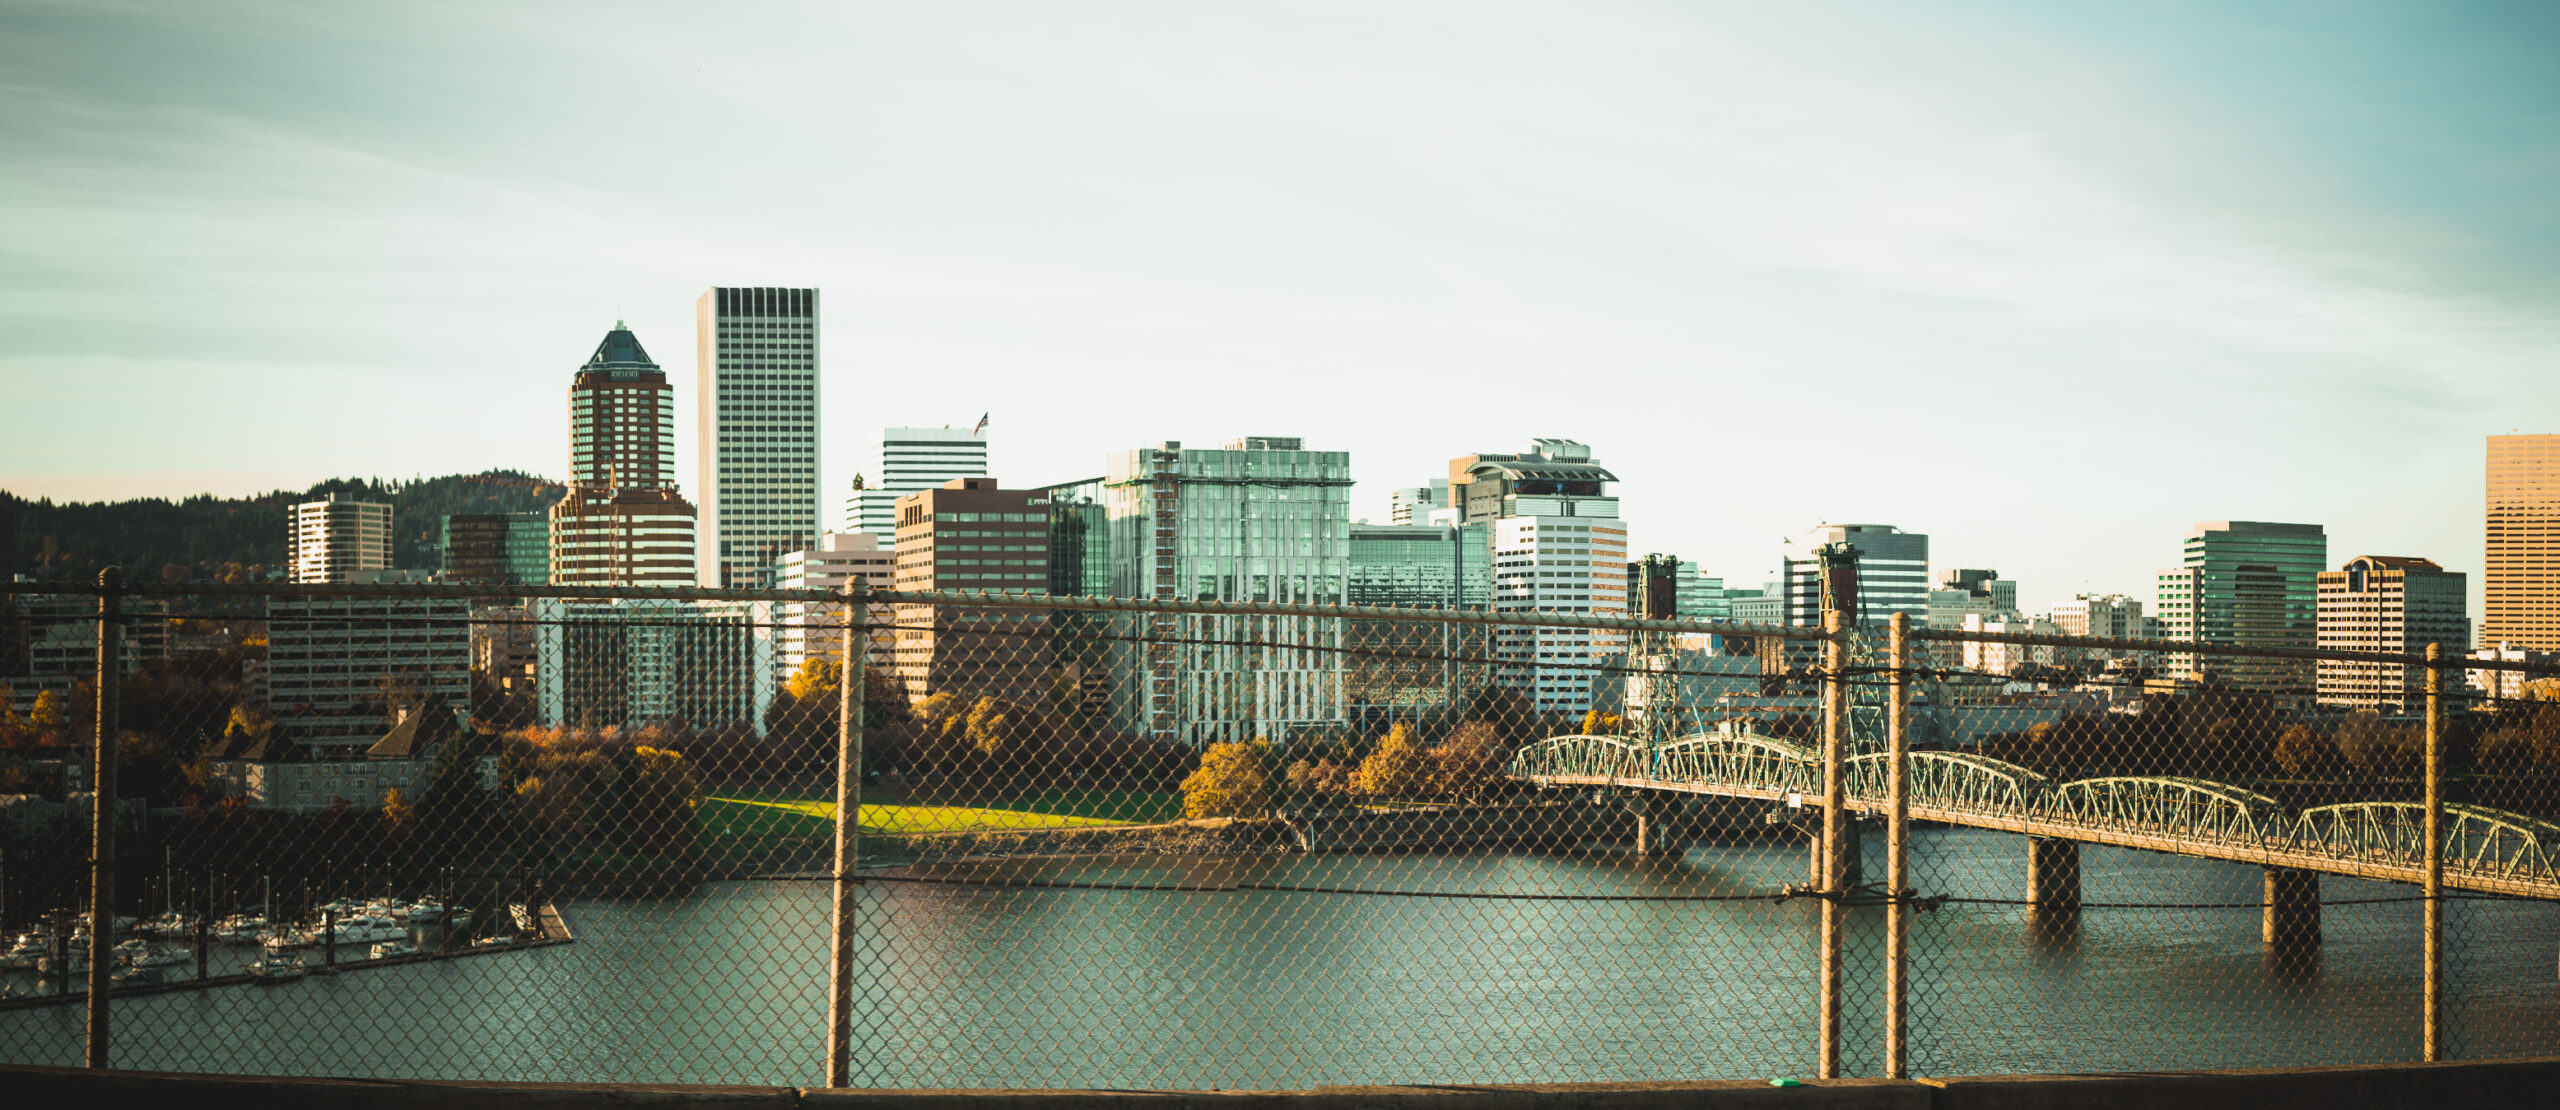 Portland, Oregon climate slush fund no help in addressing city’s real problems